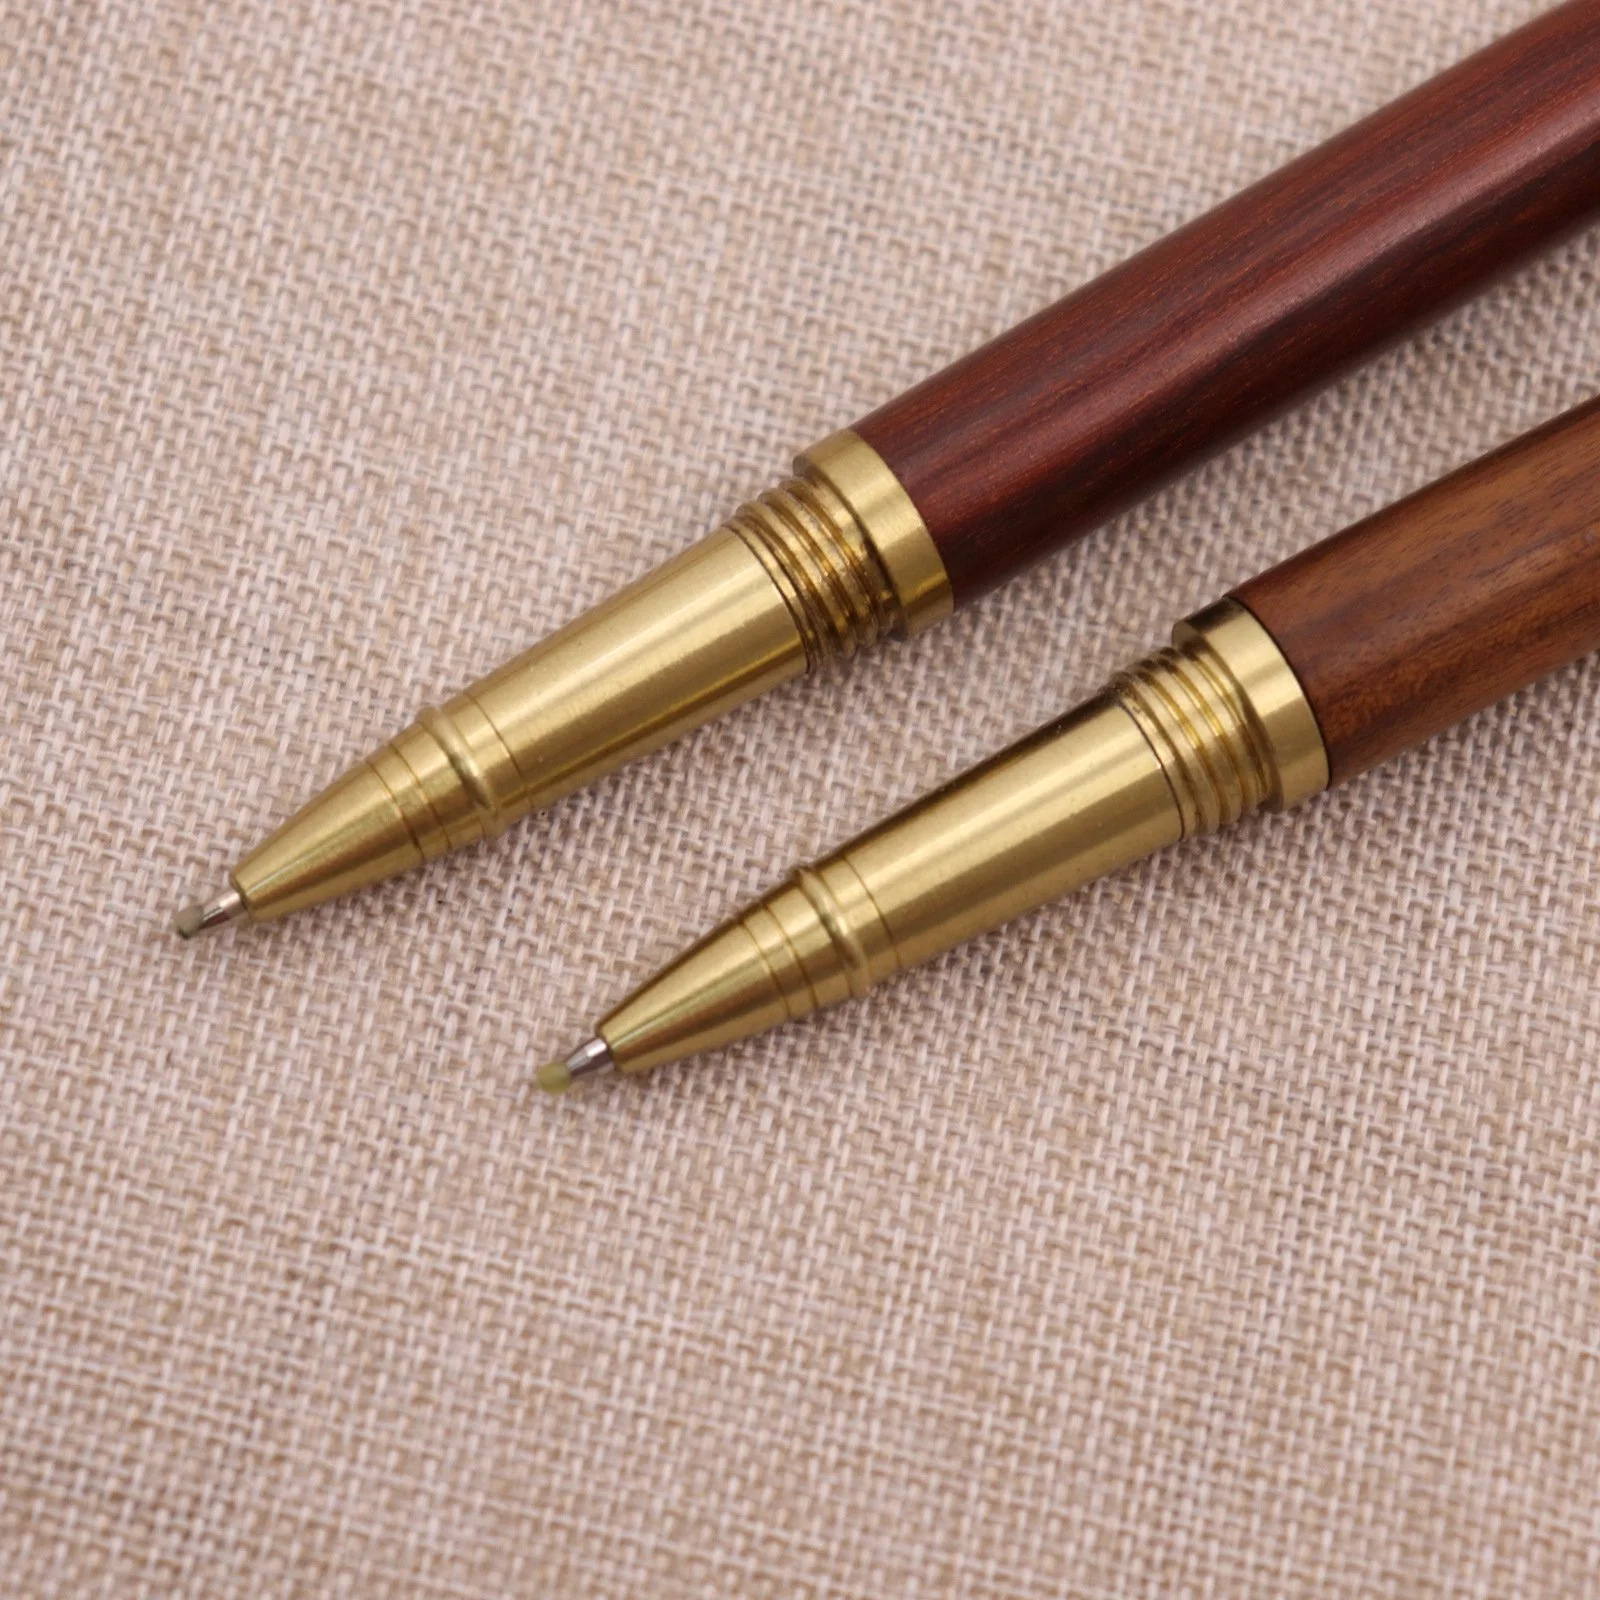 Brass Craft Rosewood Writing Pen in Rosetree Metallic Brass Pen Gift Pen